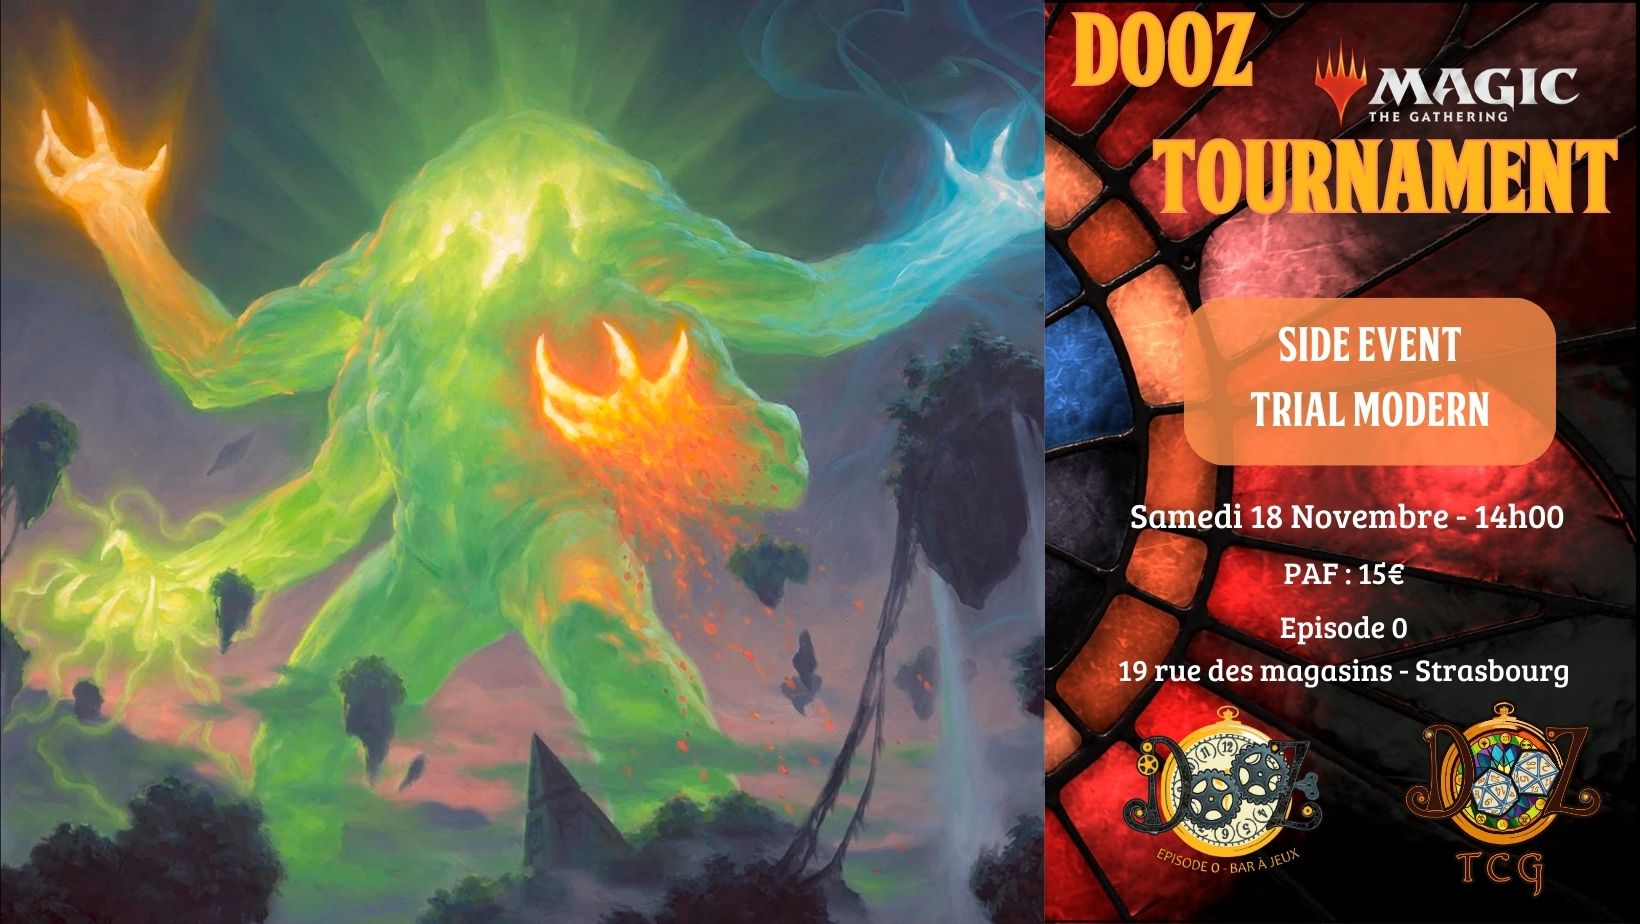 Dooz Magic Tournament #3 - Side Event Trial Modern